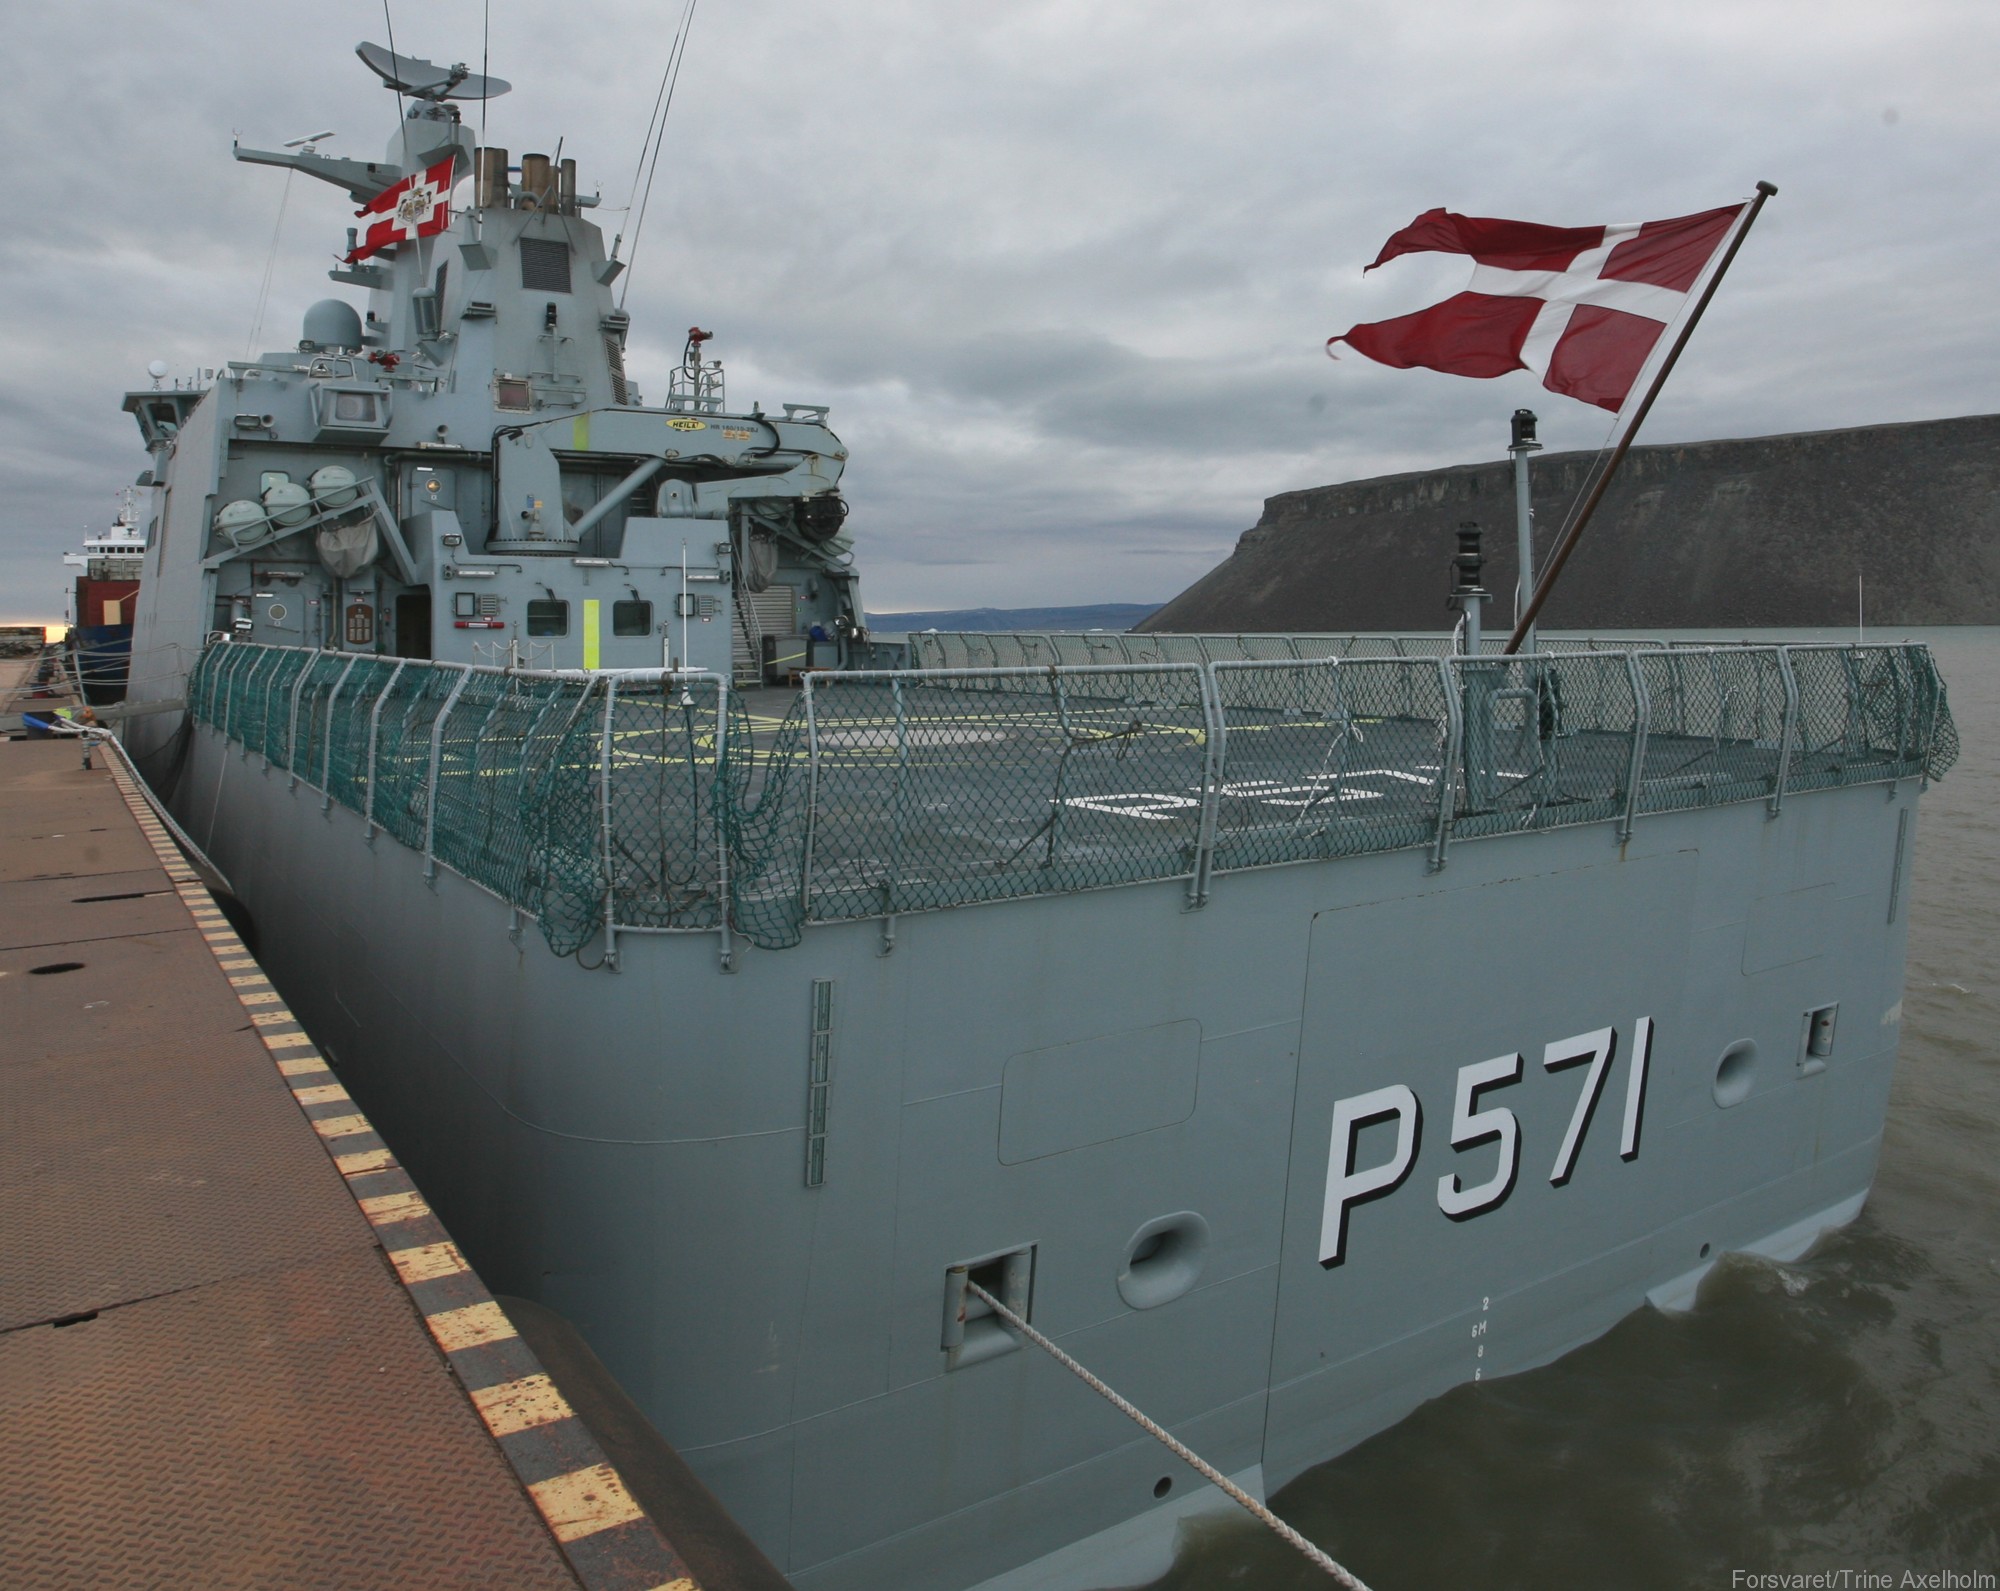 p-571 hdms ejnar mikkelsen knud rasmussen class offshore patrol vessel opv royal danish navy inspektionsfartøj 27 flight deck